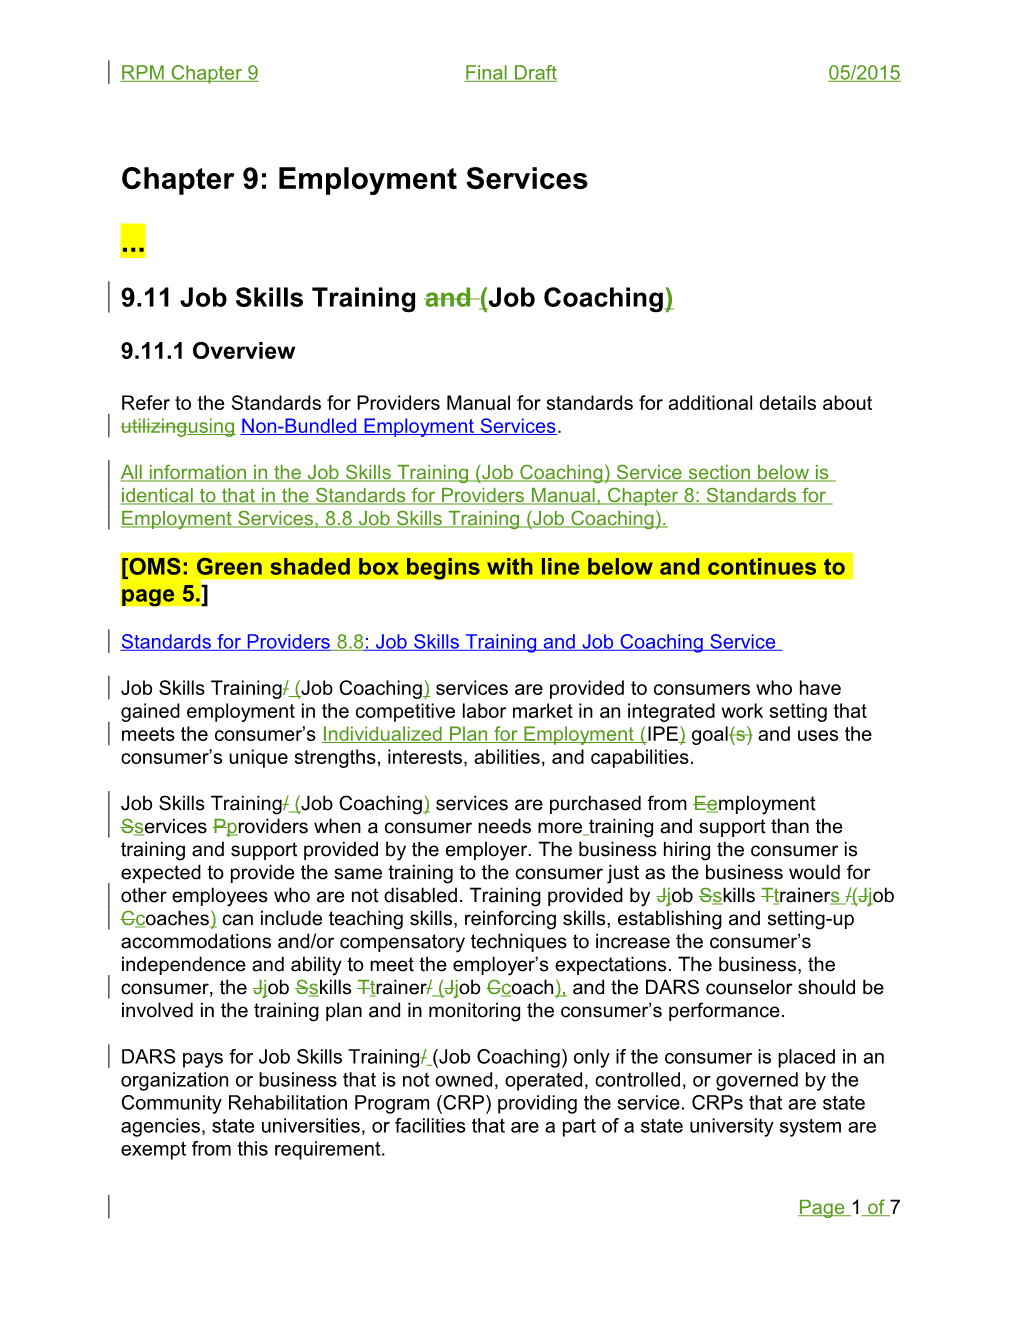 9.11 Job Skills Training and (Job Coaching)